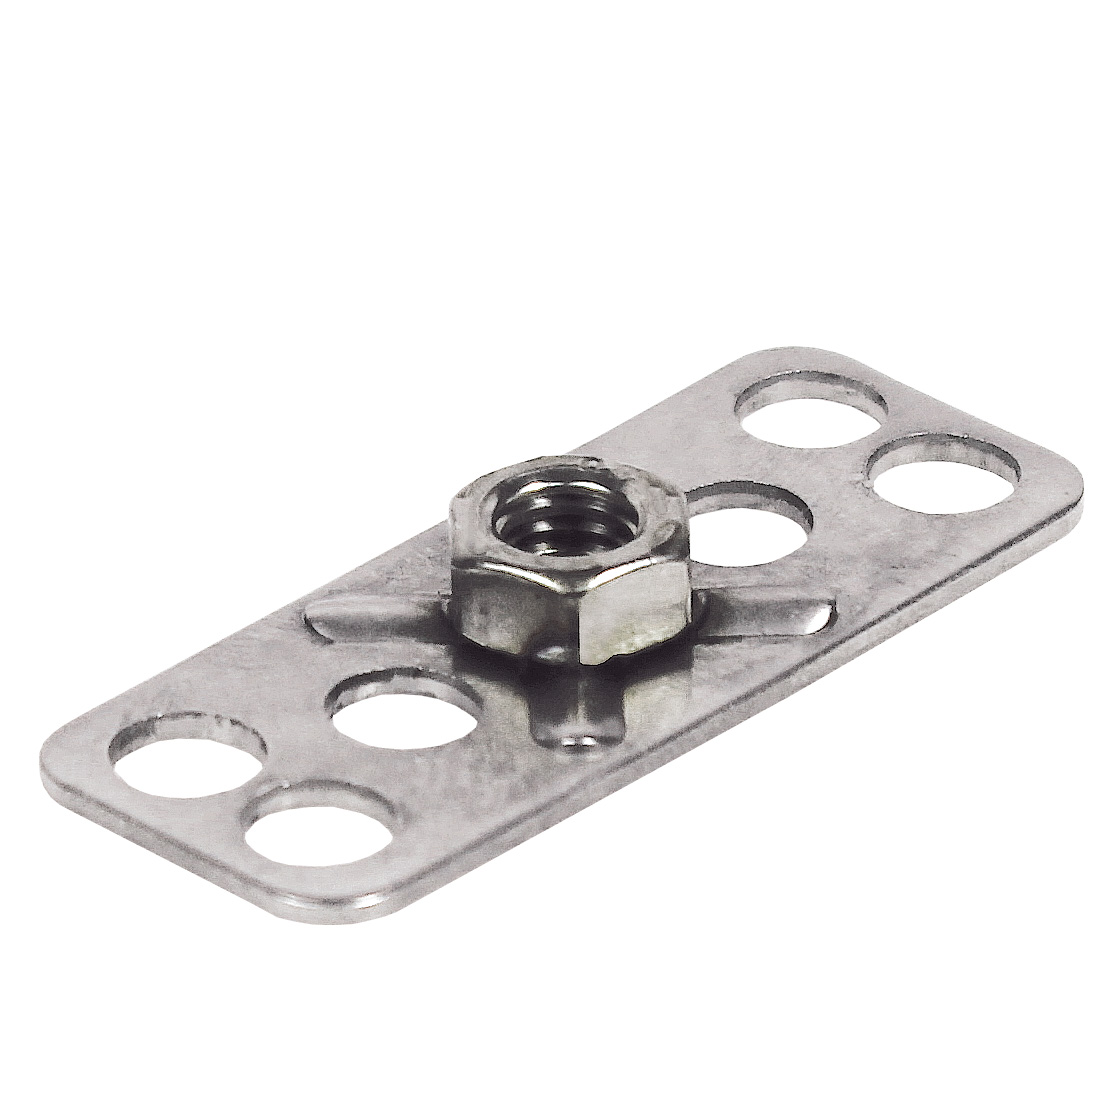 Masterplate® glueable insert rectangular - rectangular with nut - Stainless steel - 